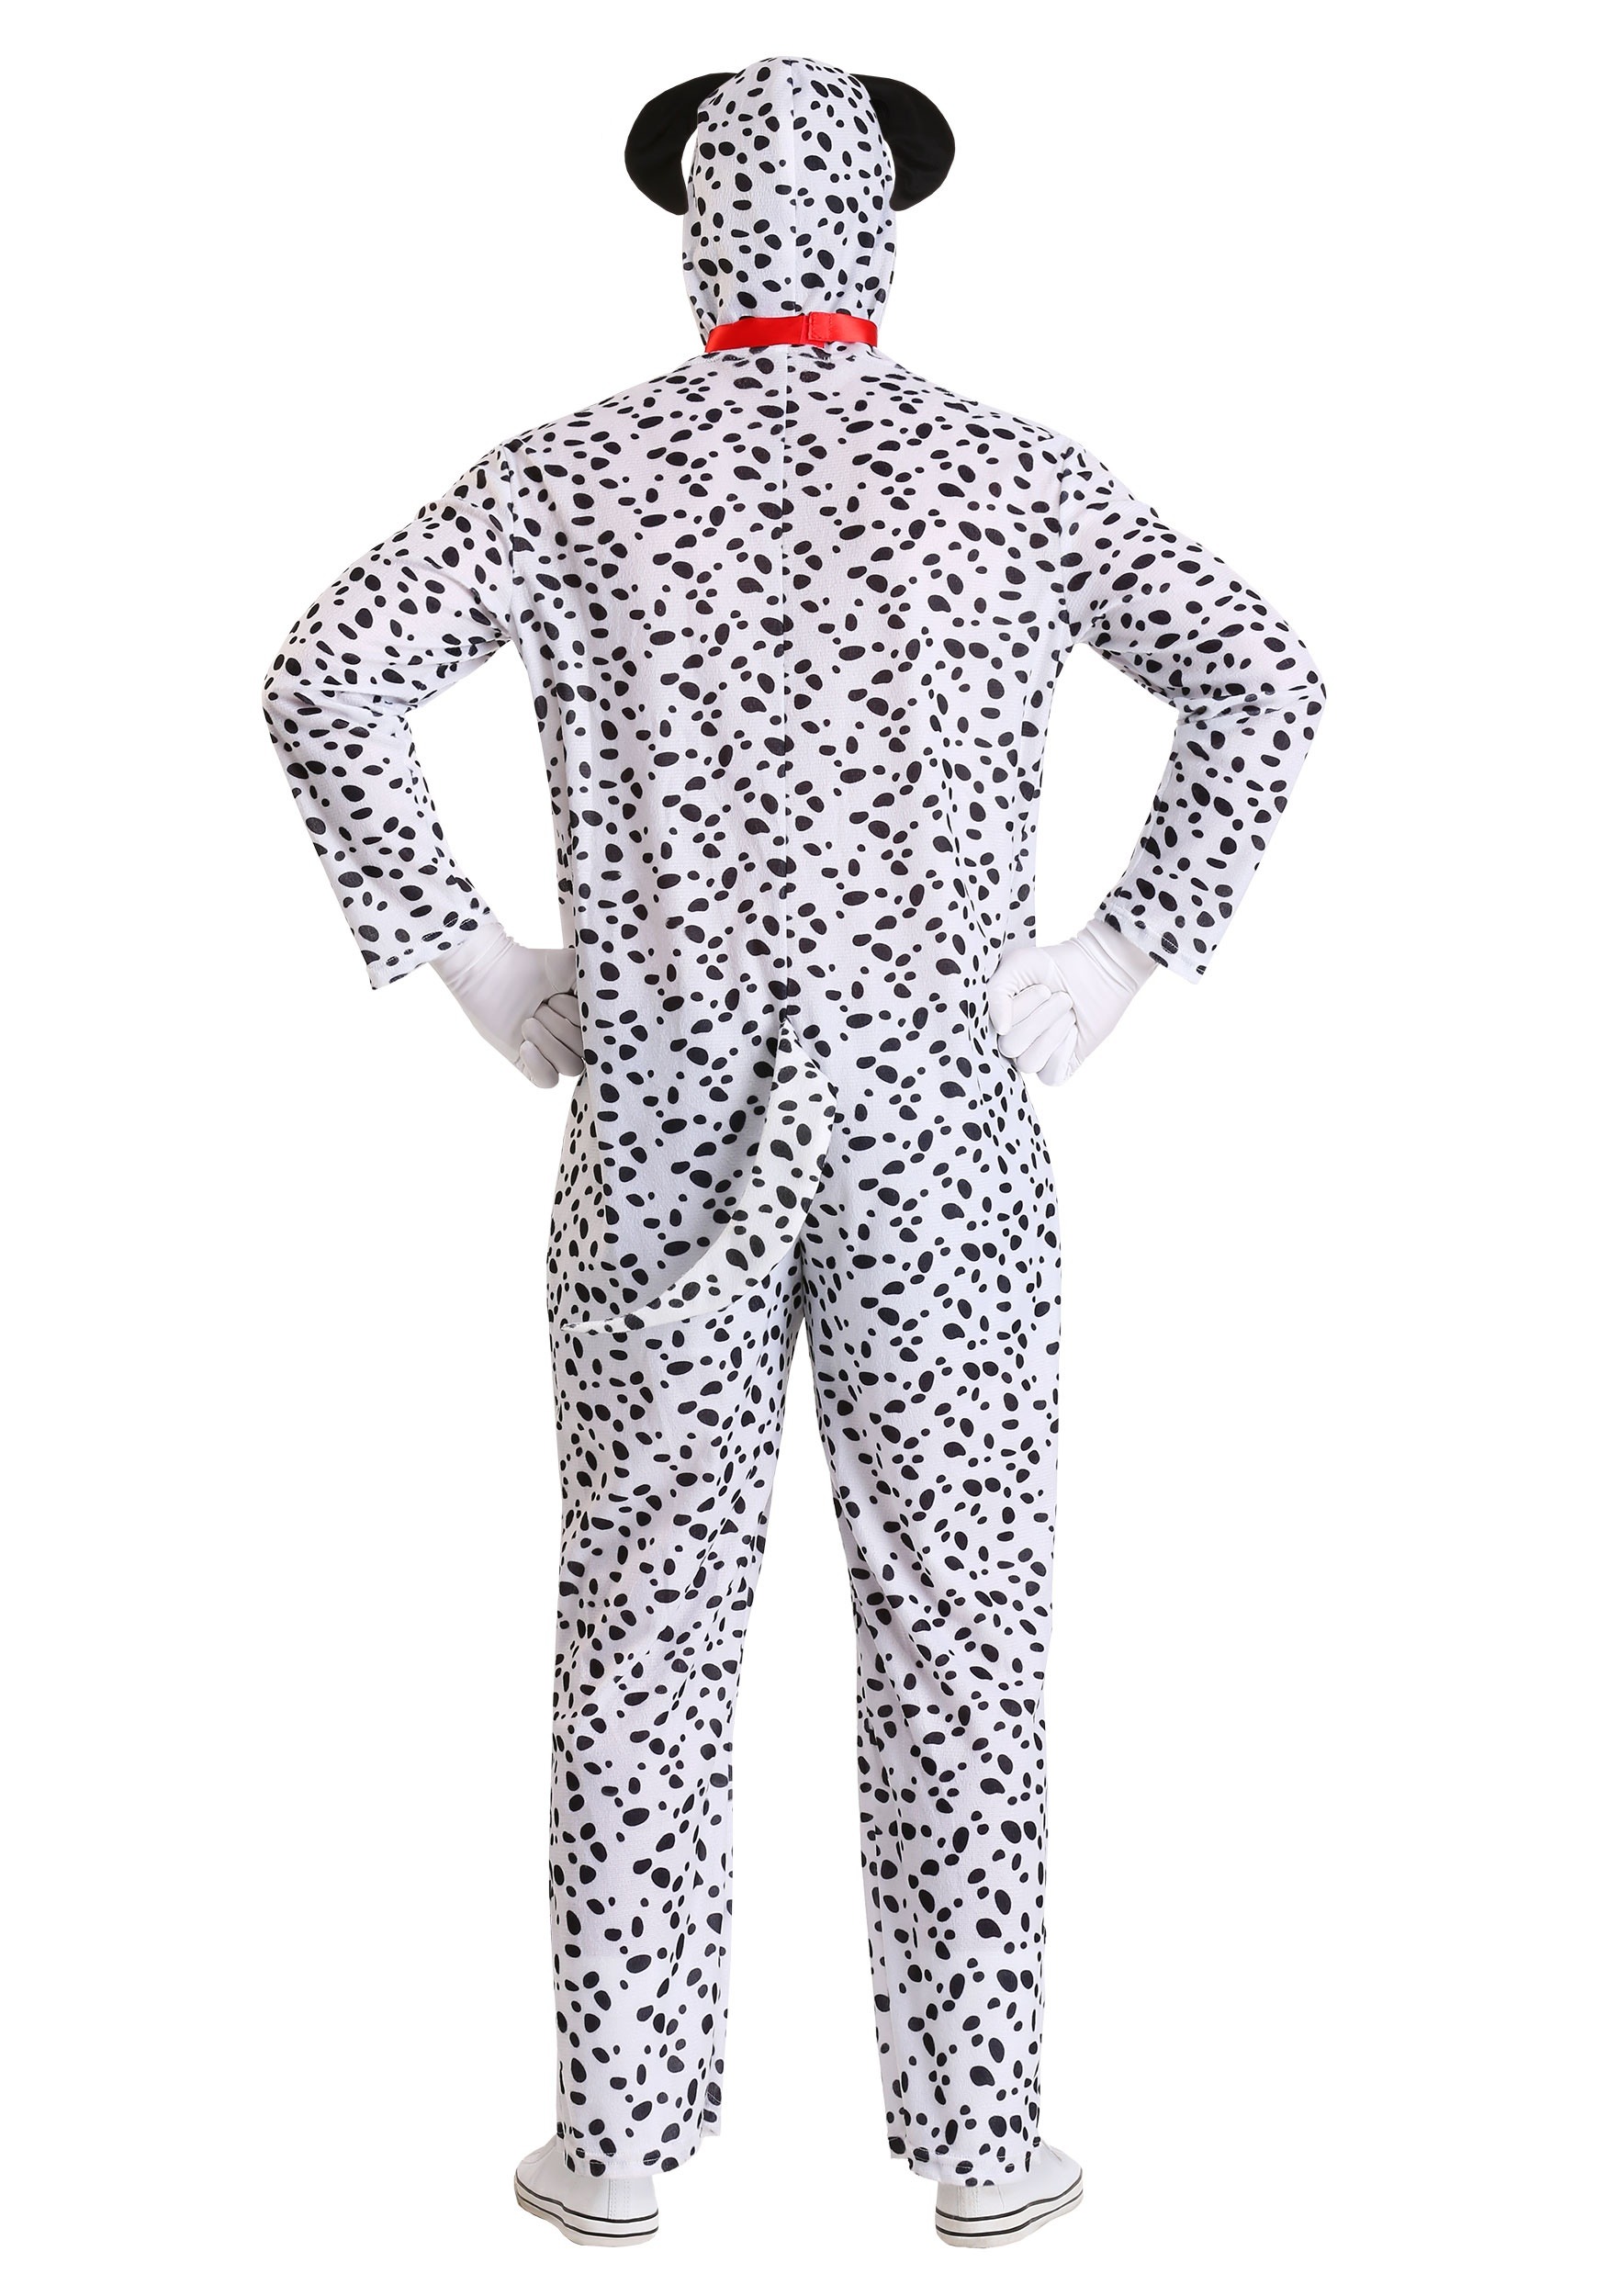 Delightful Dalmatian Adult Costume